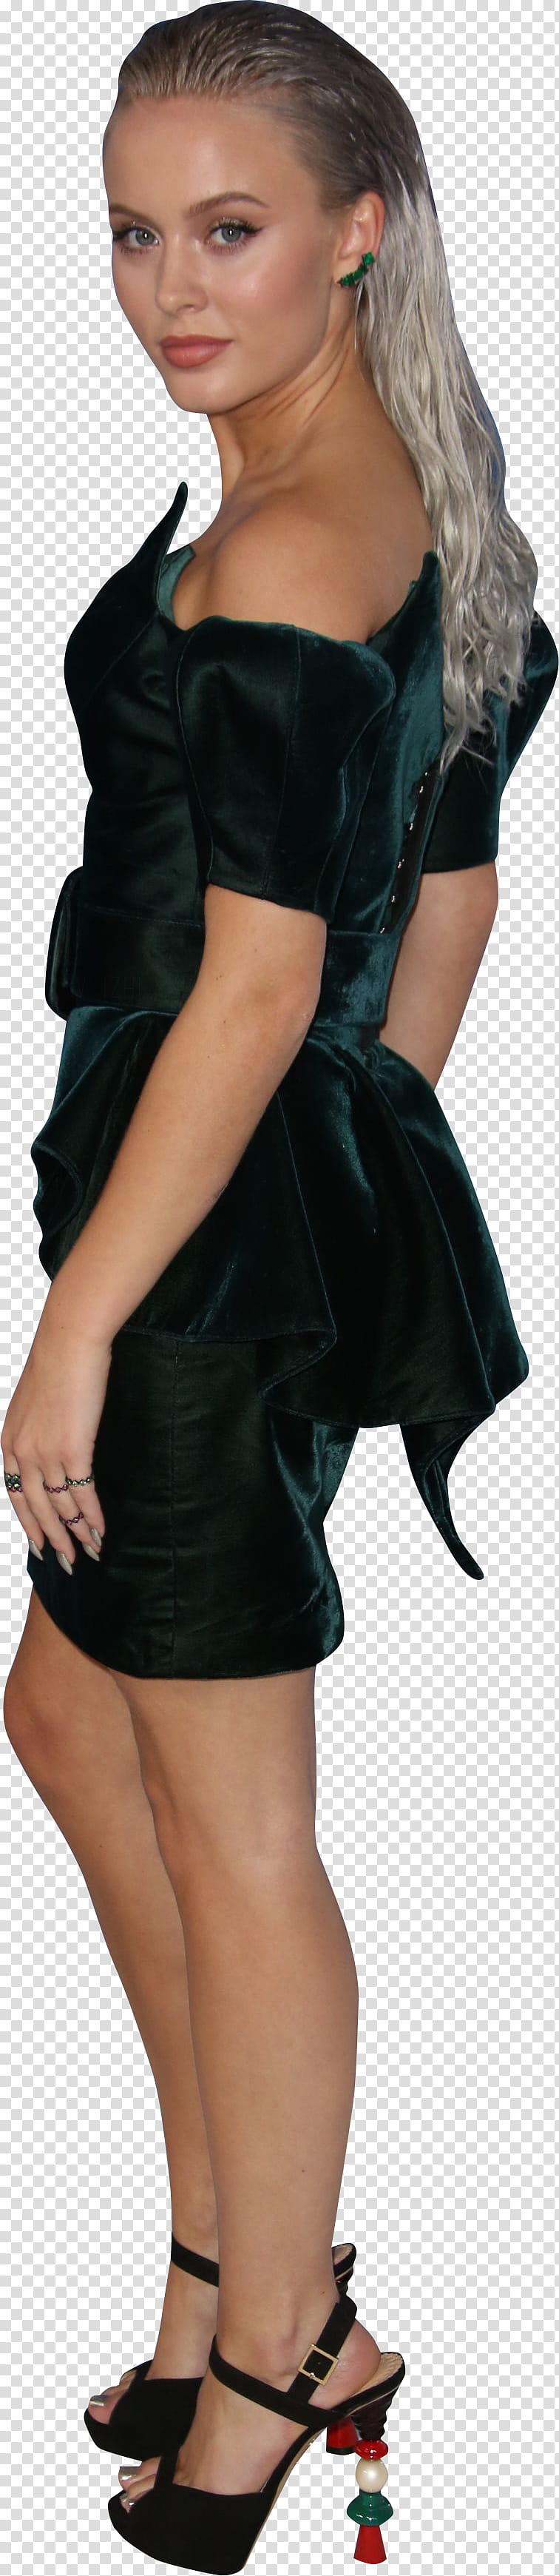 Zara Larsson transparent background PNG clipart